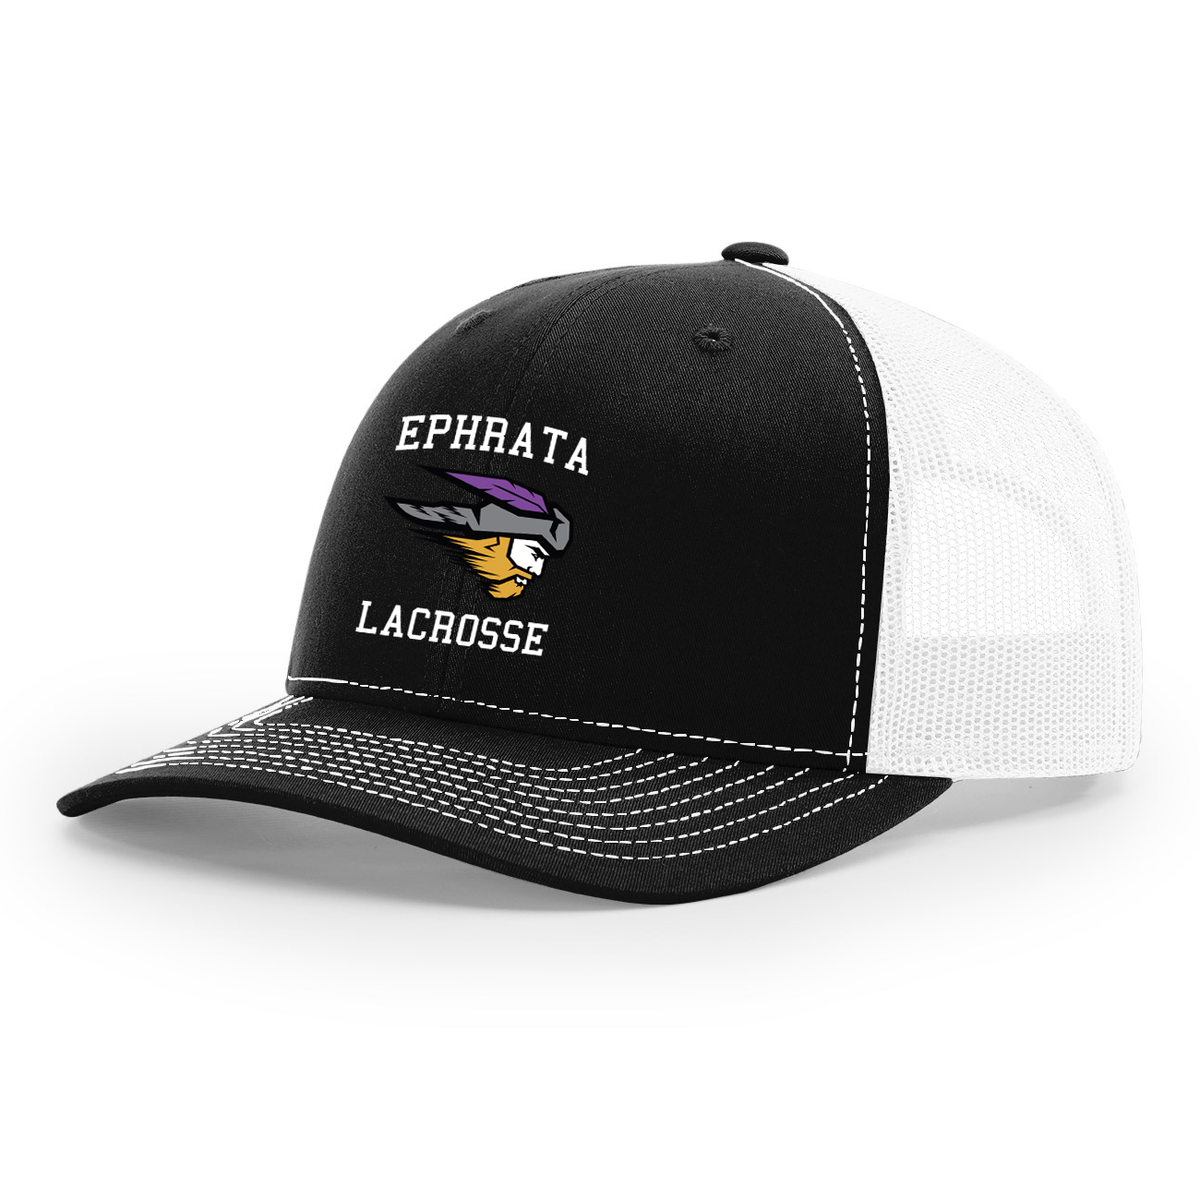 Ephrata Lacrosse Richardson Snapback Trucker Cap